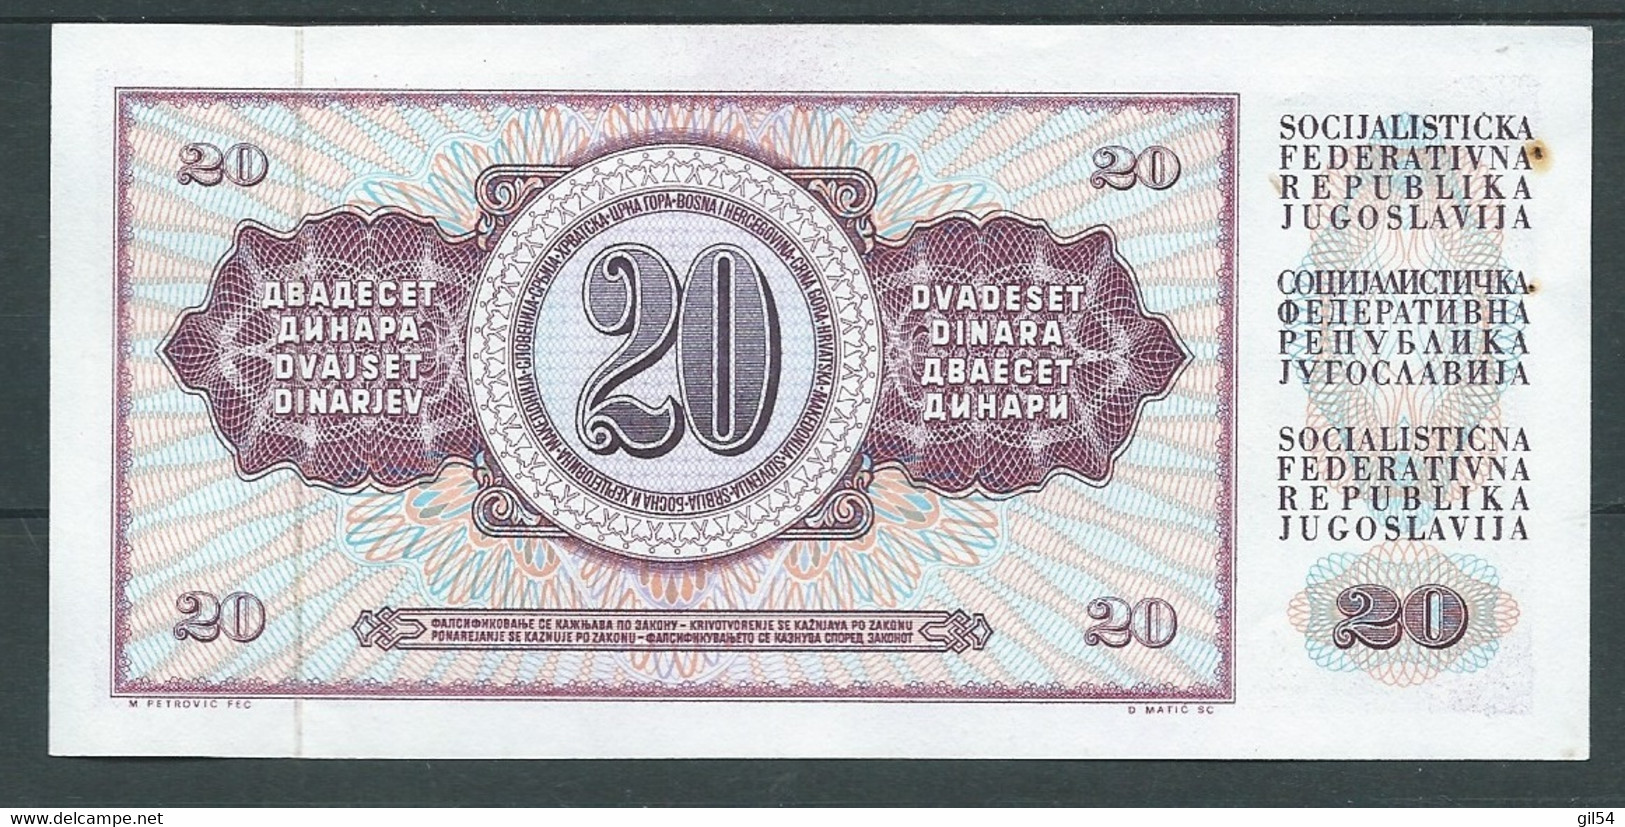 Billet Yougoslavie - 20 Dinars -2 Trous D'épingle Aspect Neuf  - 1974 - DF1121572  LAURA 9609 - Jugoslawien